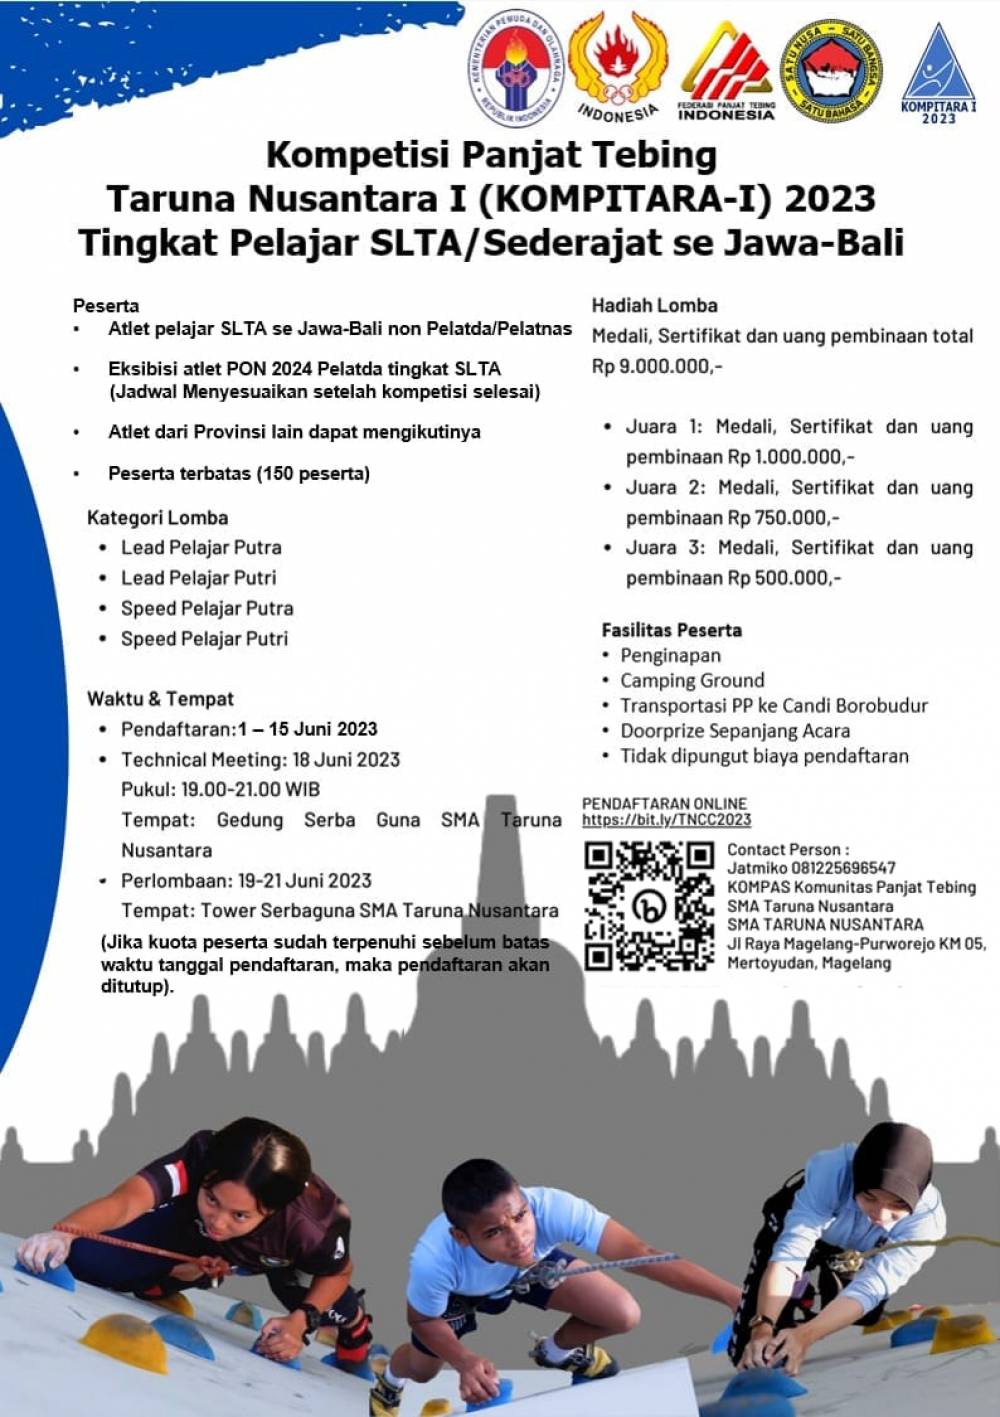 Kompetisi Panjat Tebing Taruna Nusantara I 2023 Tingkat Pelajar SLTA/Sederajat se Jawa-Bali